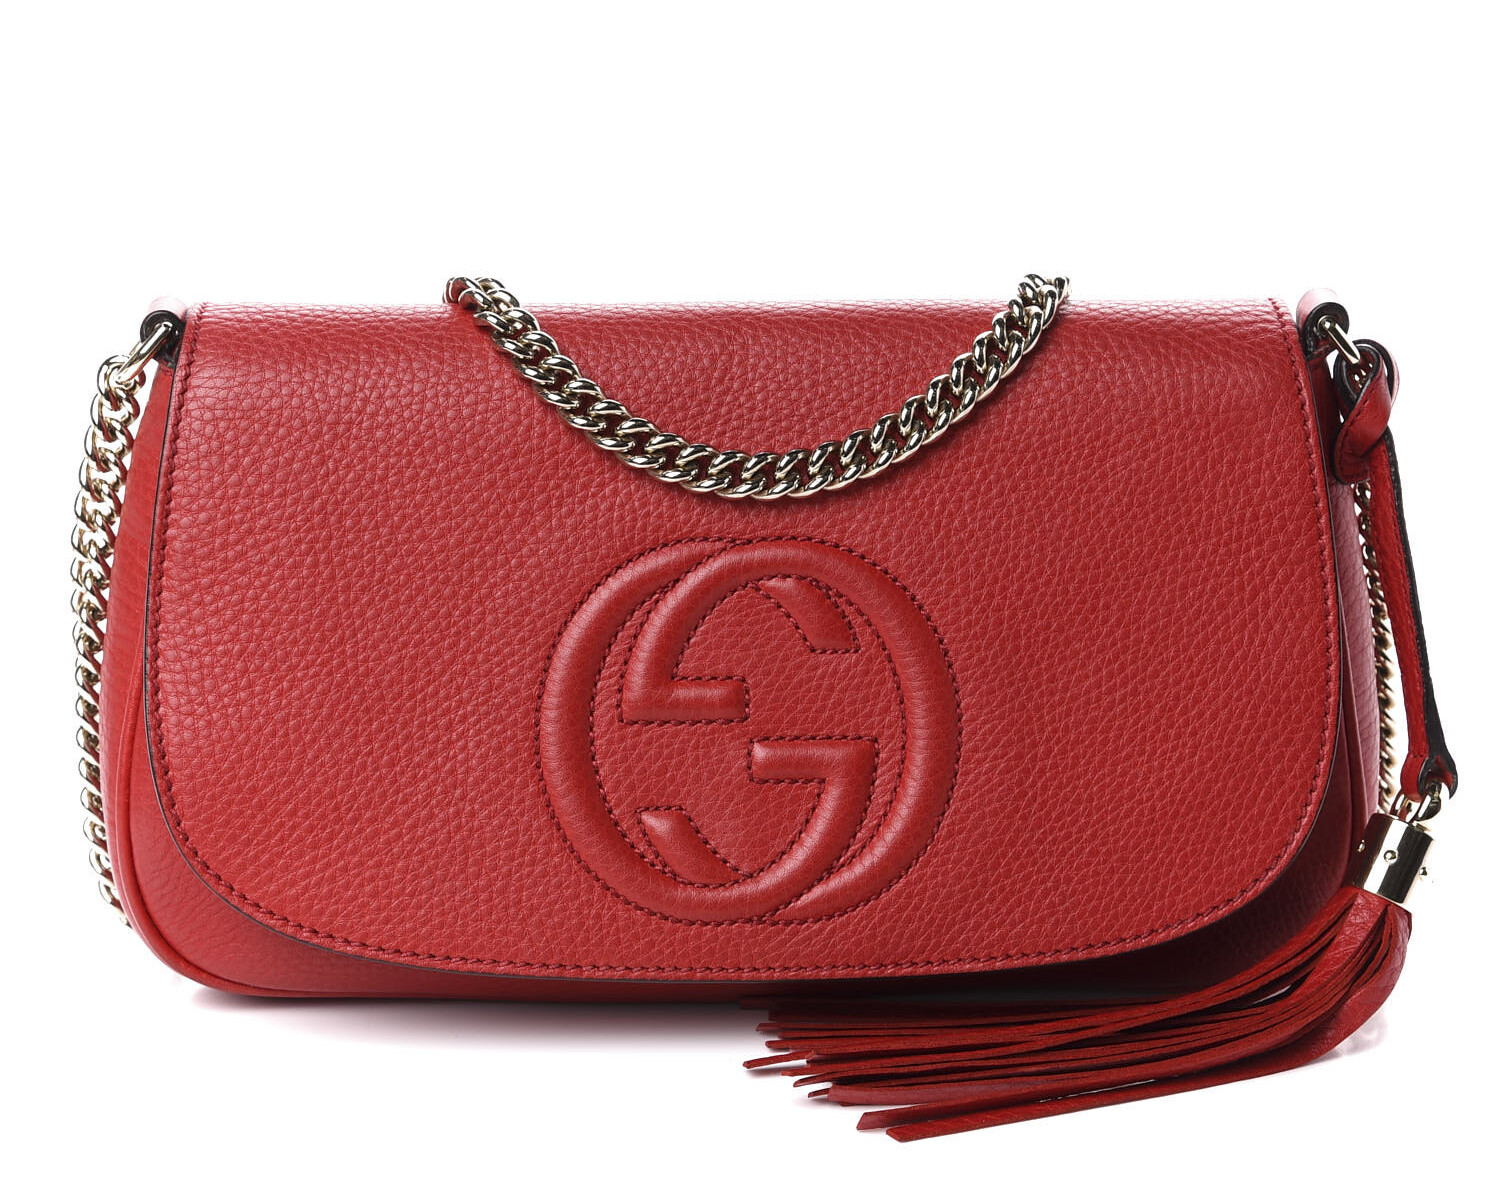 Red Gucci Medium Soho Crossbody Flap Bag - Wornright Authenticated